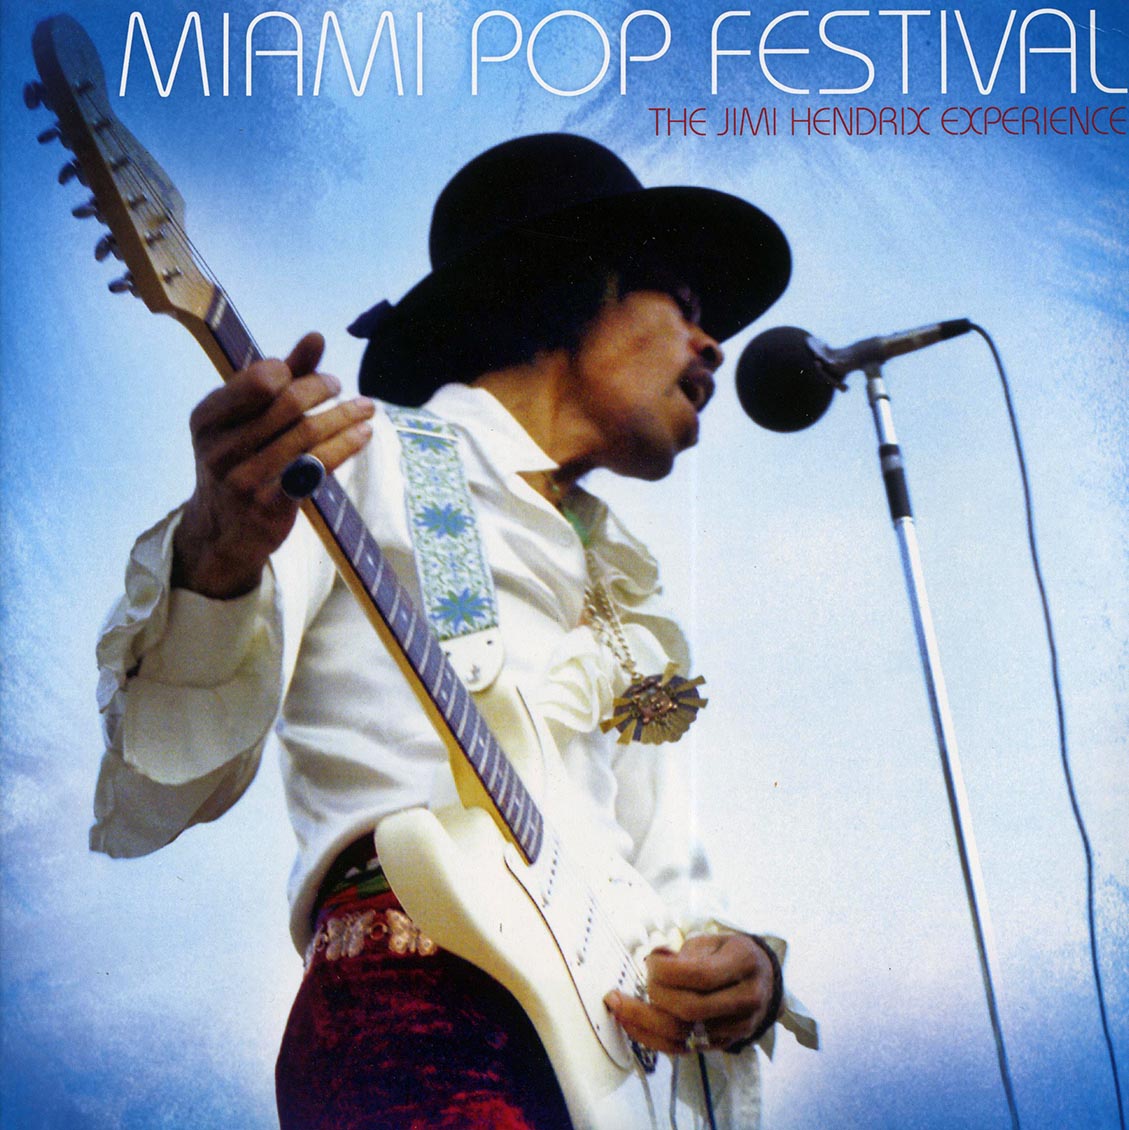 The Jimi Hendrix Experience - Miami Pop Festival (2xLP) (180g) (remastered) - Vinyl LP